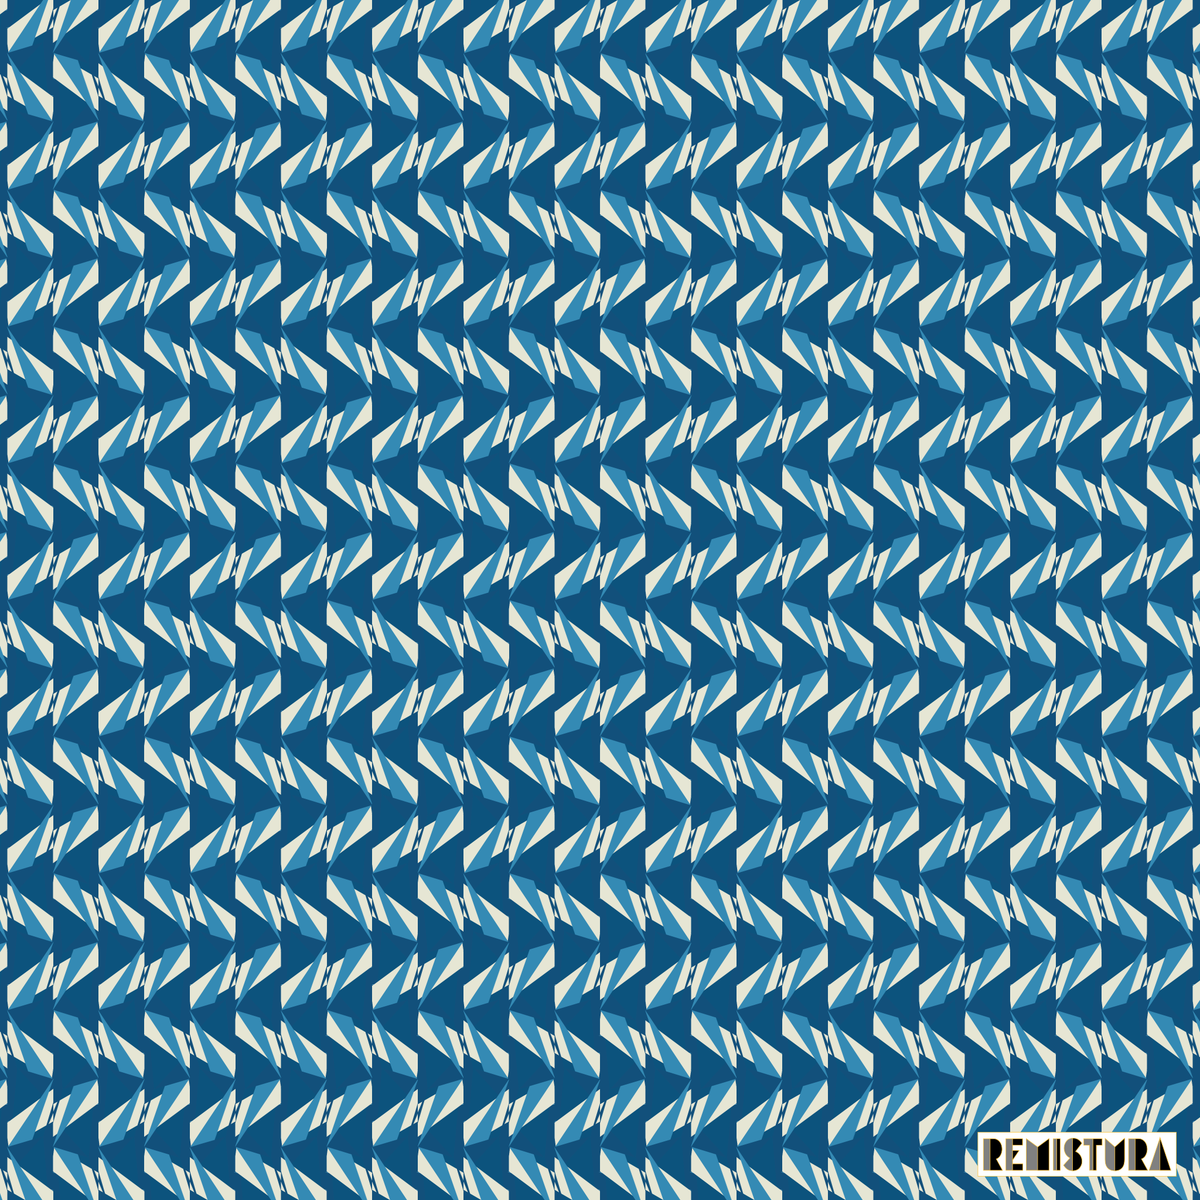 2023021801 - Subtlety

-
#generative #geometric #pattern #design
#math #code #symmetry #tessellation
#generative #color #vector #graphic #patterndesign
#processing #svg
#surfacedesign #digitalart #geometricdesign #abstractart
#patternartist #vectorart #graphicdesign
#patternlove